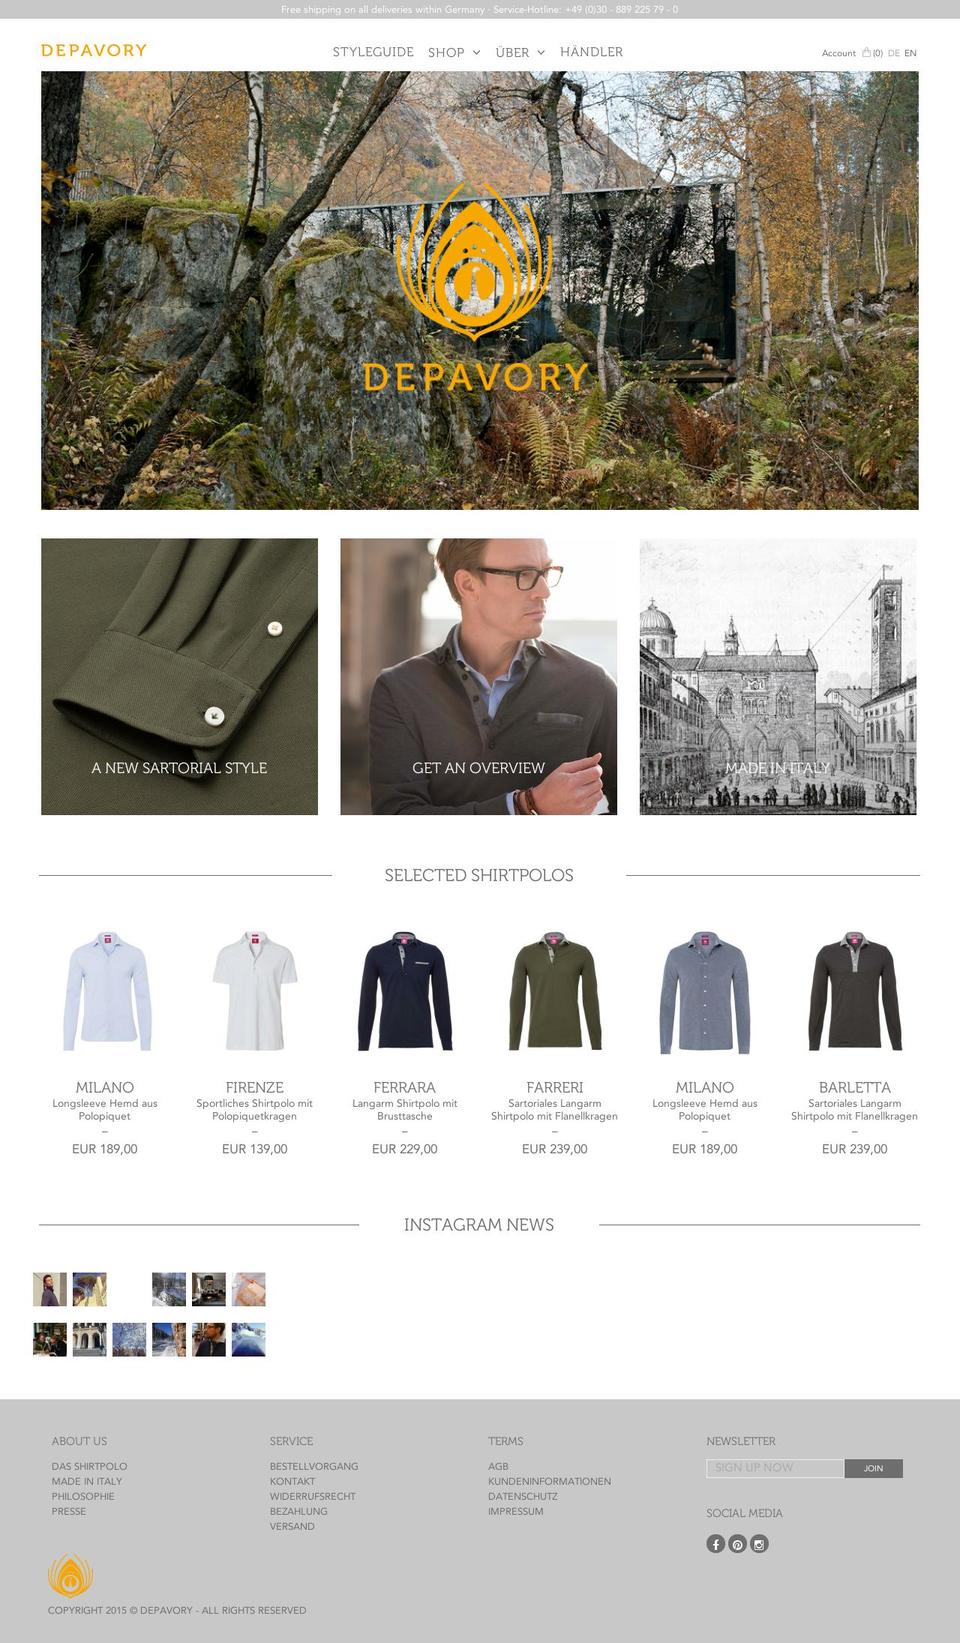 Depavory (2016-05-13) Shopify theme site example shirtpolocompany.de